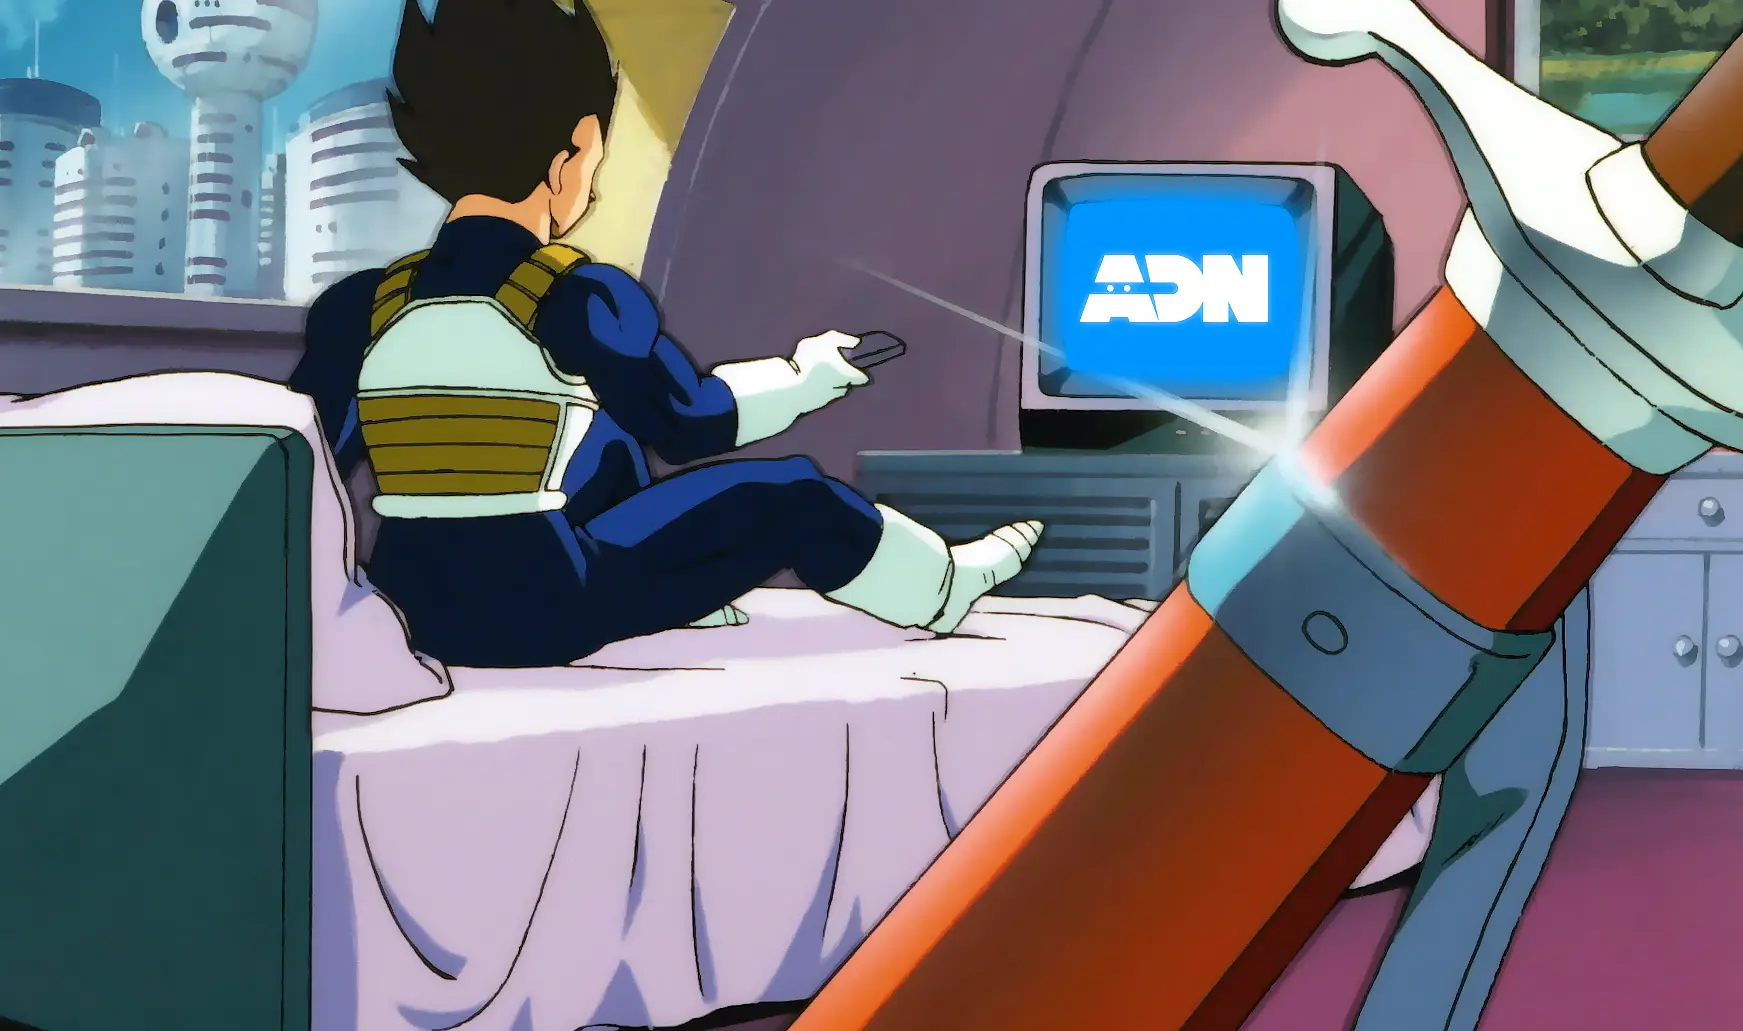 Dragon Ball Z - Anime en streaming GRATUIT, VOSTFR & VF, HD